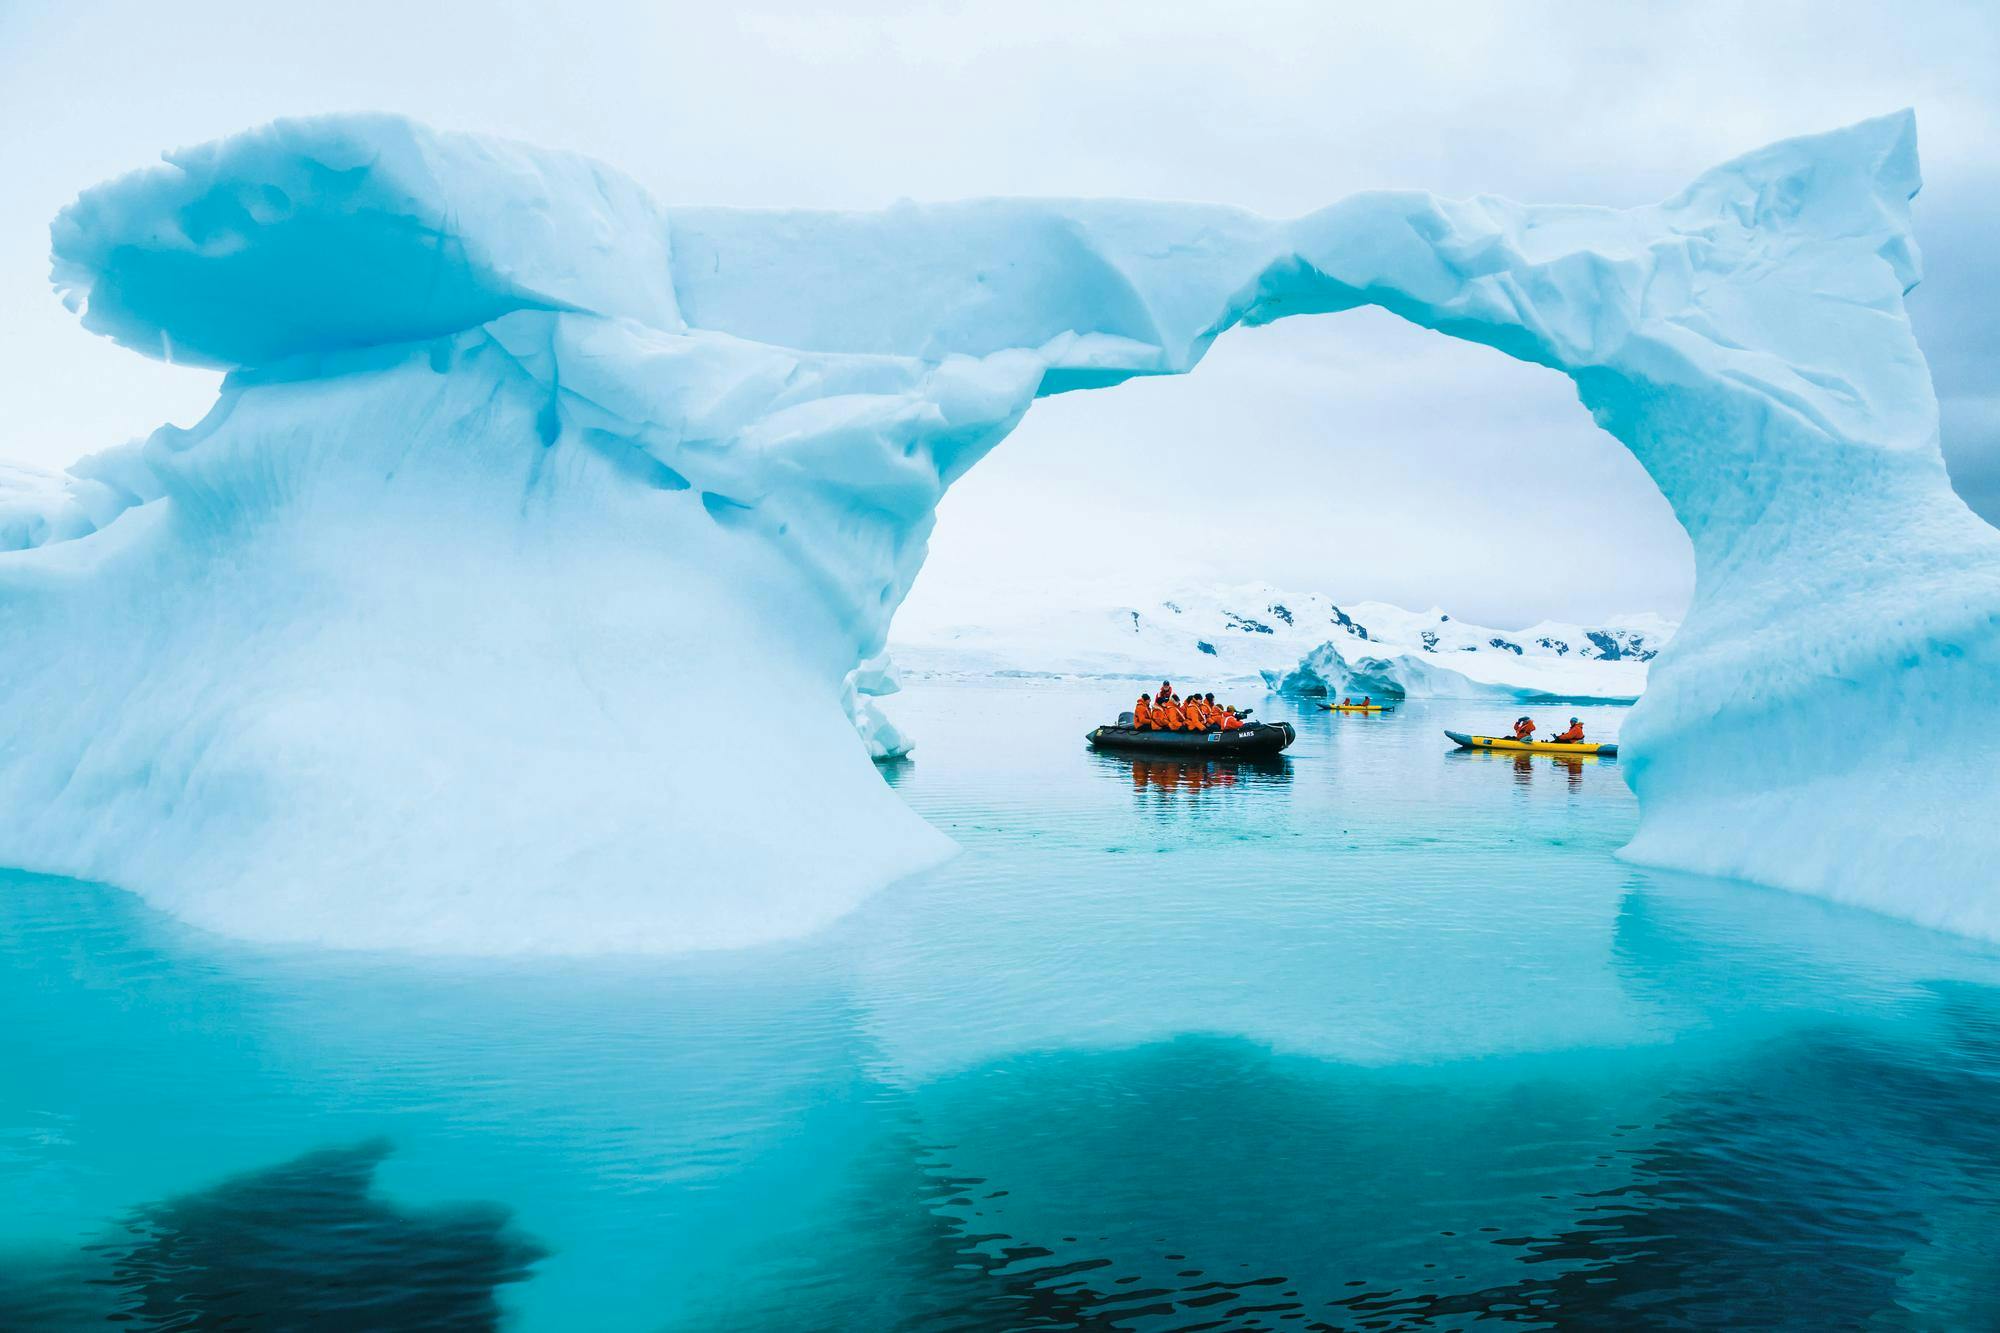 Guests exploring by zodiac and kayaks see a blue ice arch/blue iceberg up close, at Niko Harbor, Antarctic Peninsula, Southern Ocean, Antarctica.